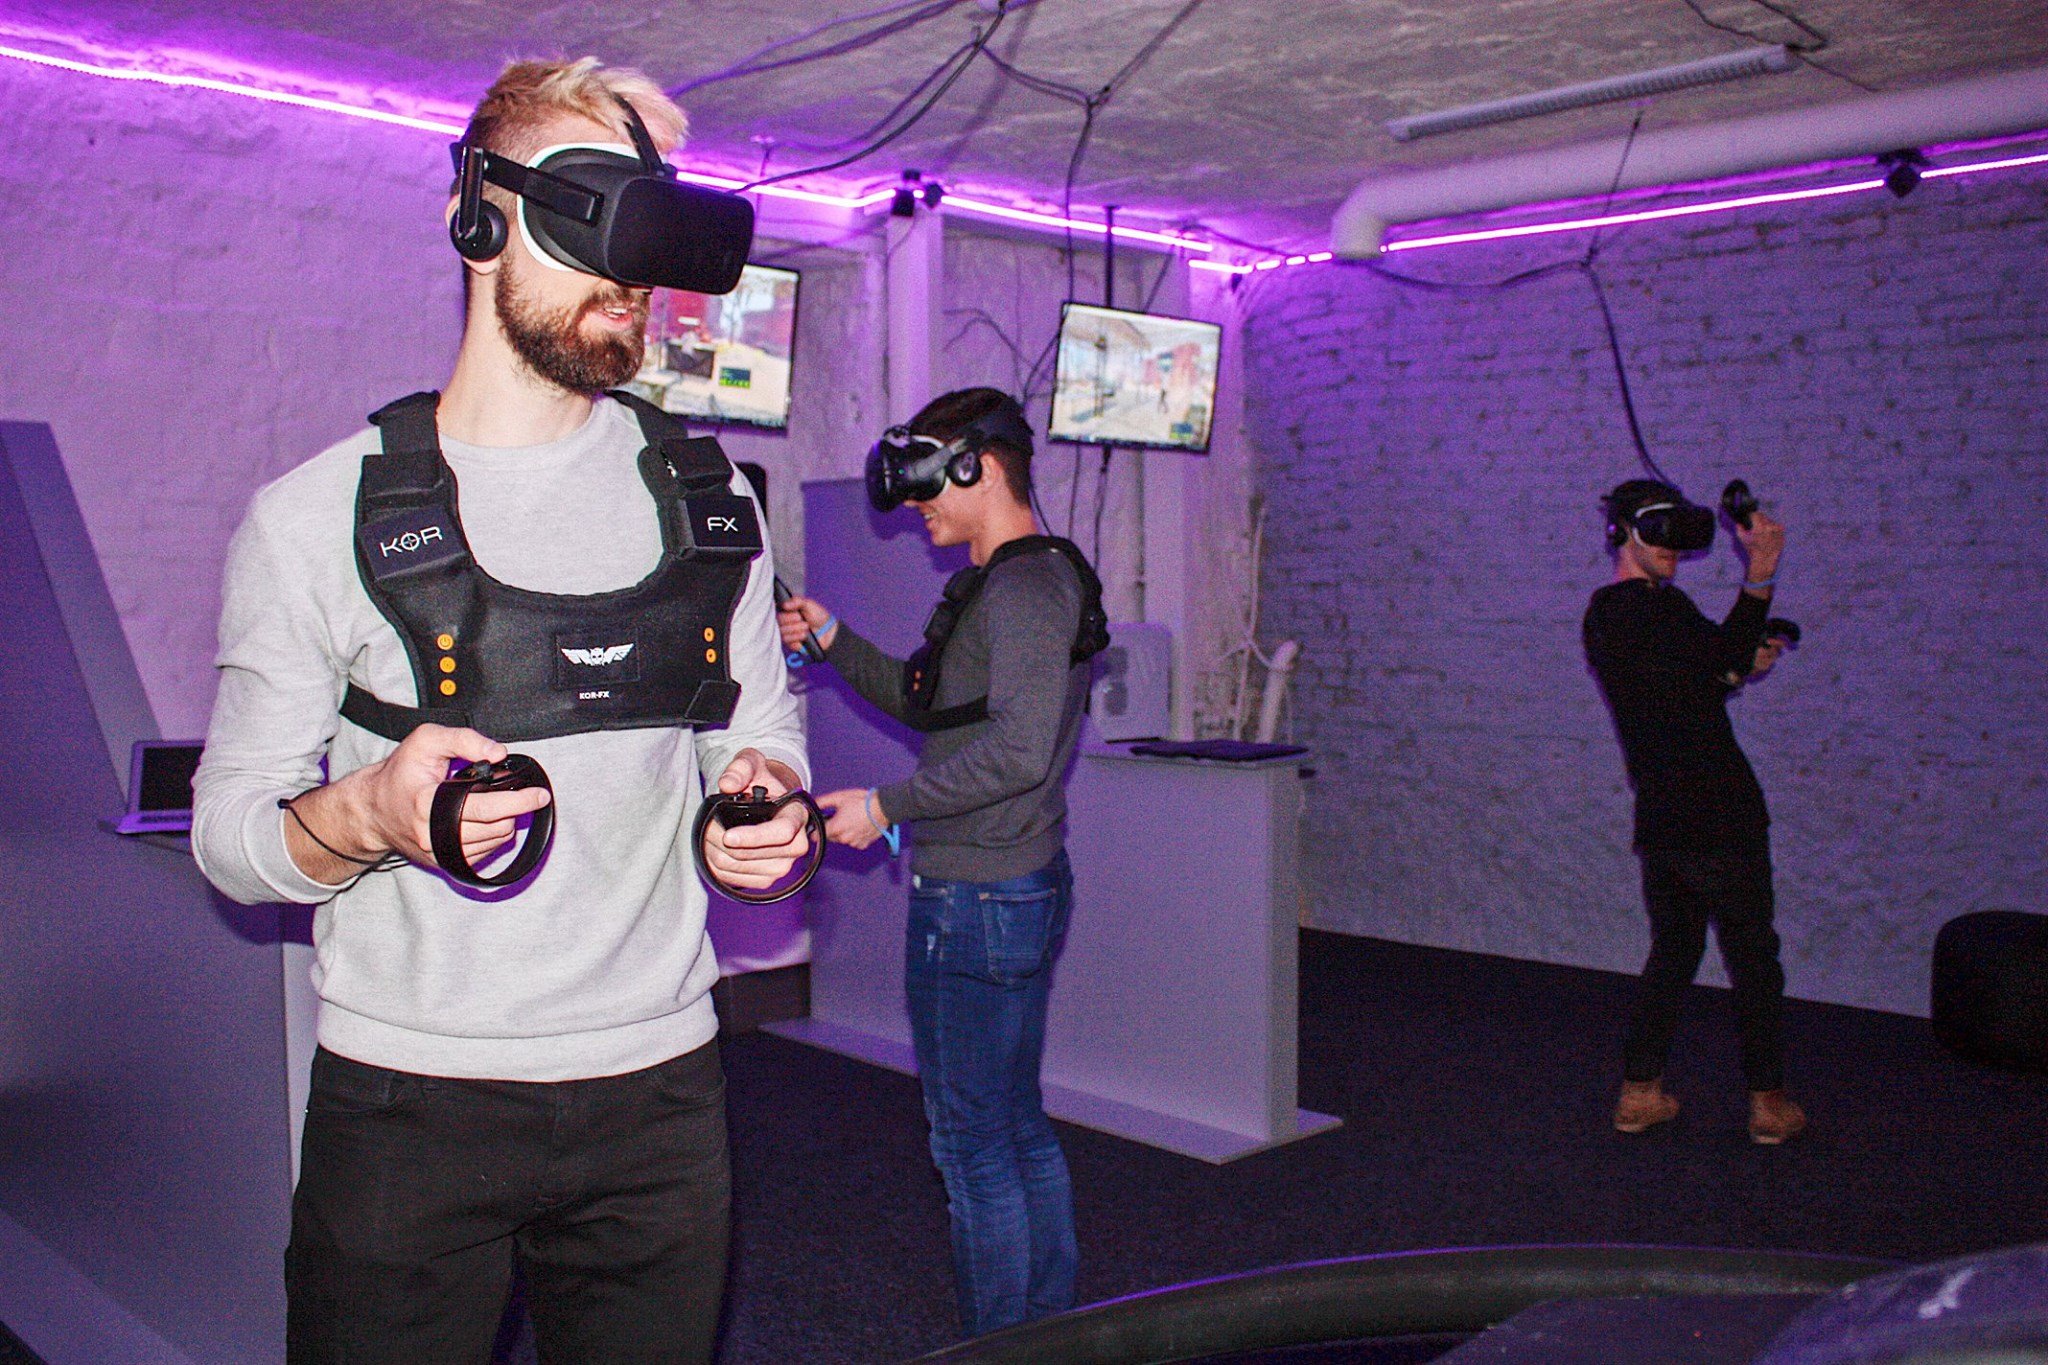 Vr club vrpark. Клуб виртуальной реальности. Комната виртуальной реальности. Виртуальная реальность игры. Виртуальные очки.